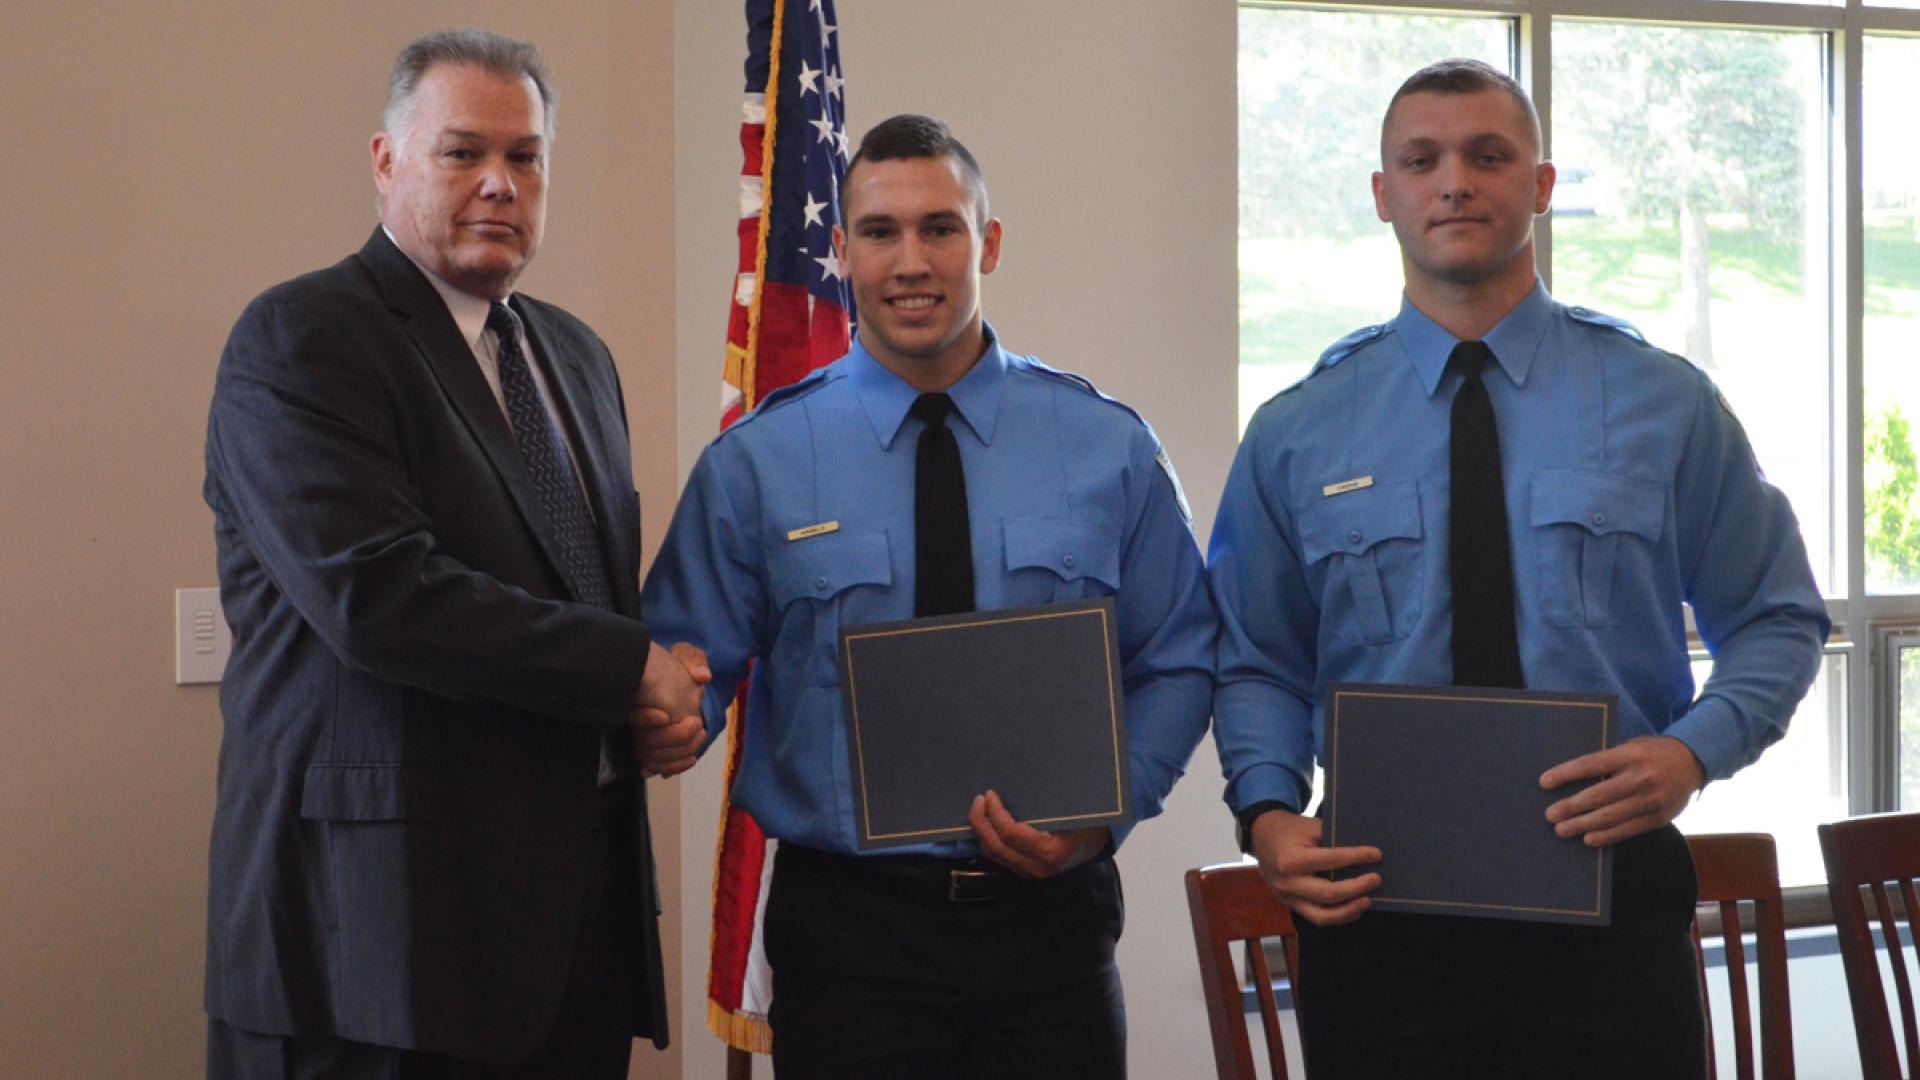 Police Academy graduates